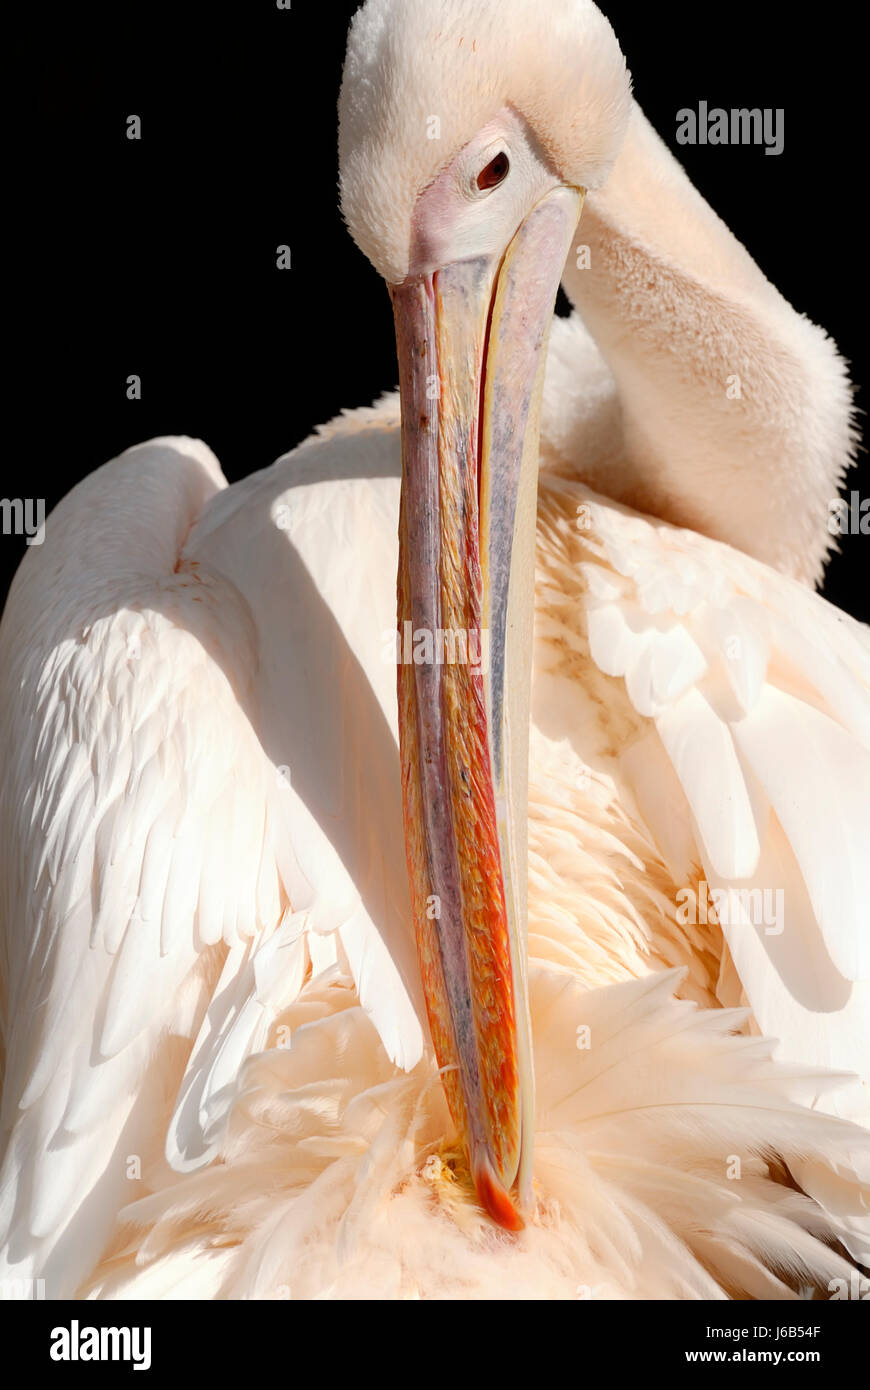 bird birds feathers feathering pelican plumage personal care bird birds soft Stock Photo